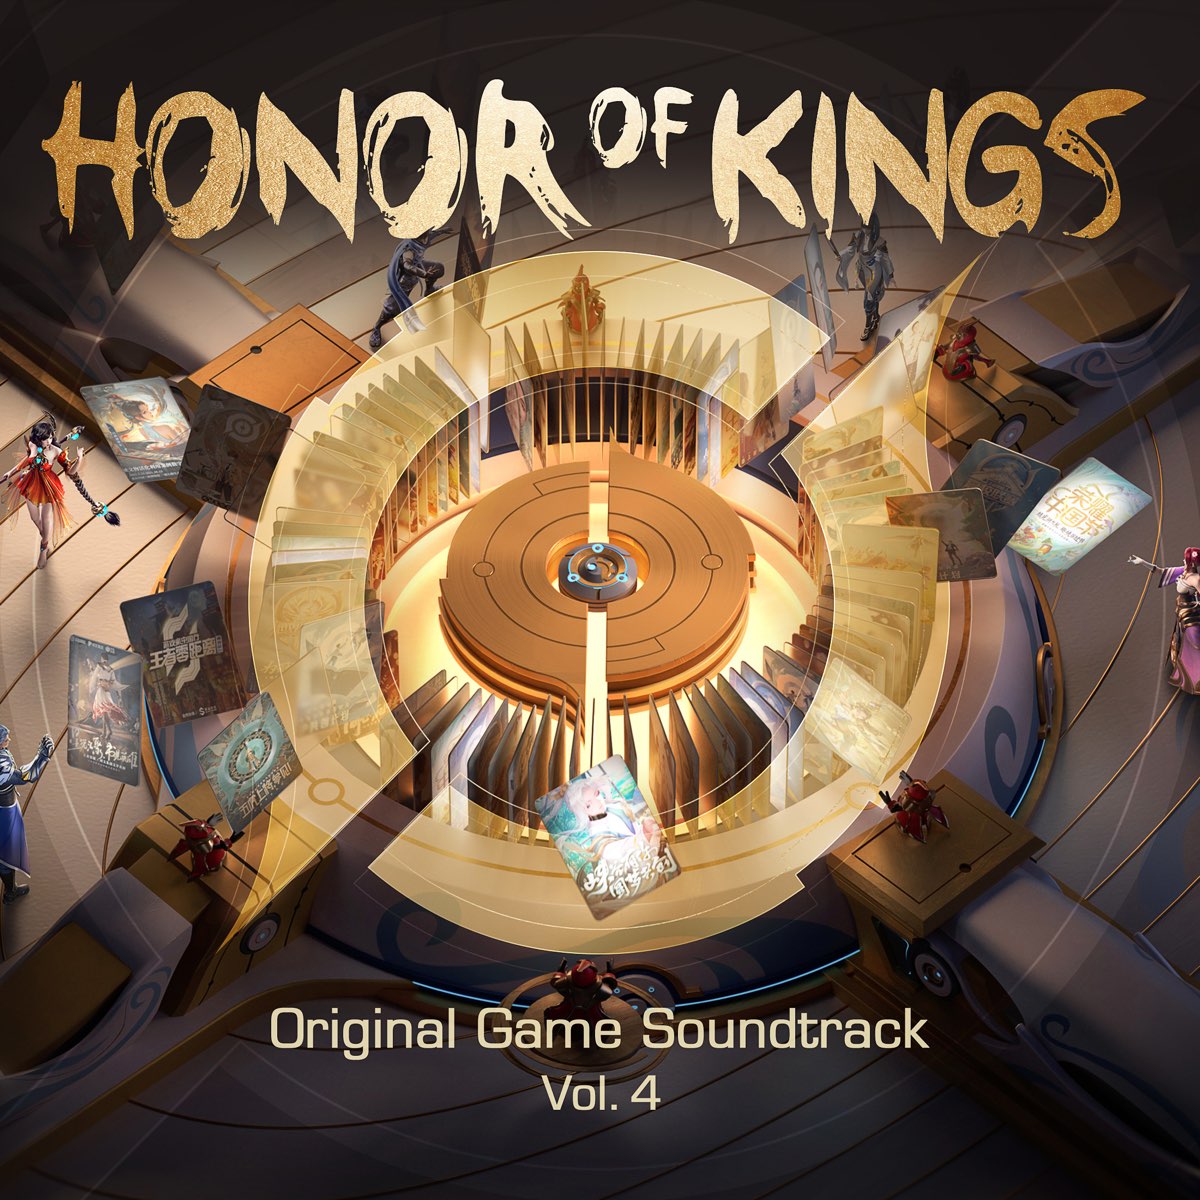 Honor of Kings, Vol. 2 (Original Game Soundtrack) - Album by Honor of Kings